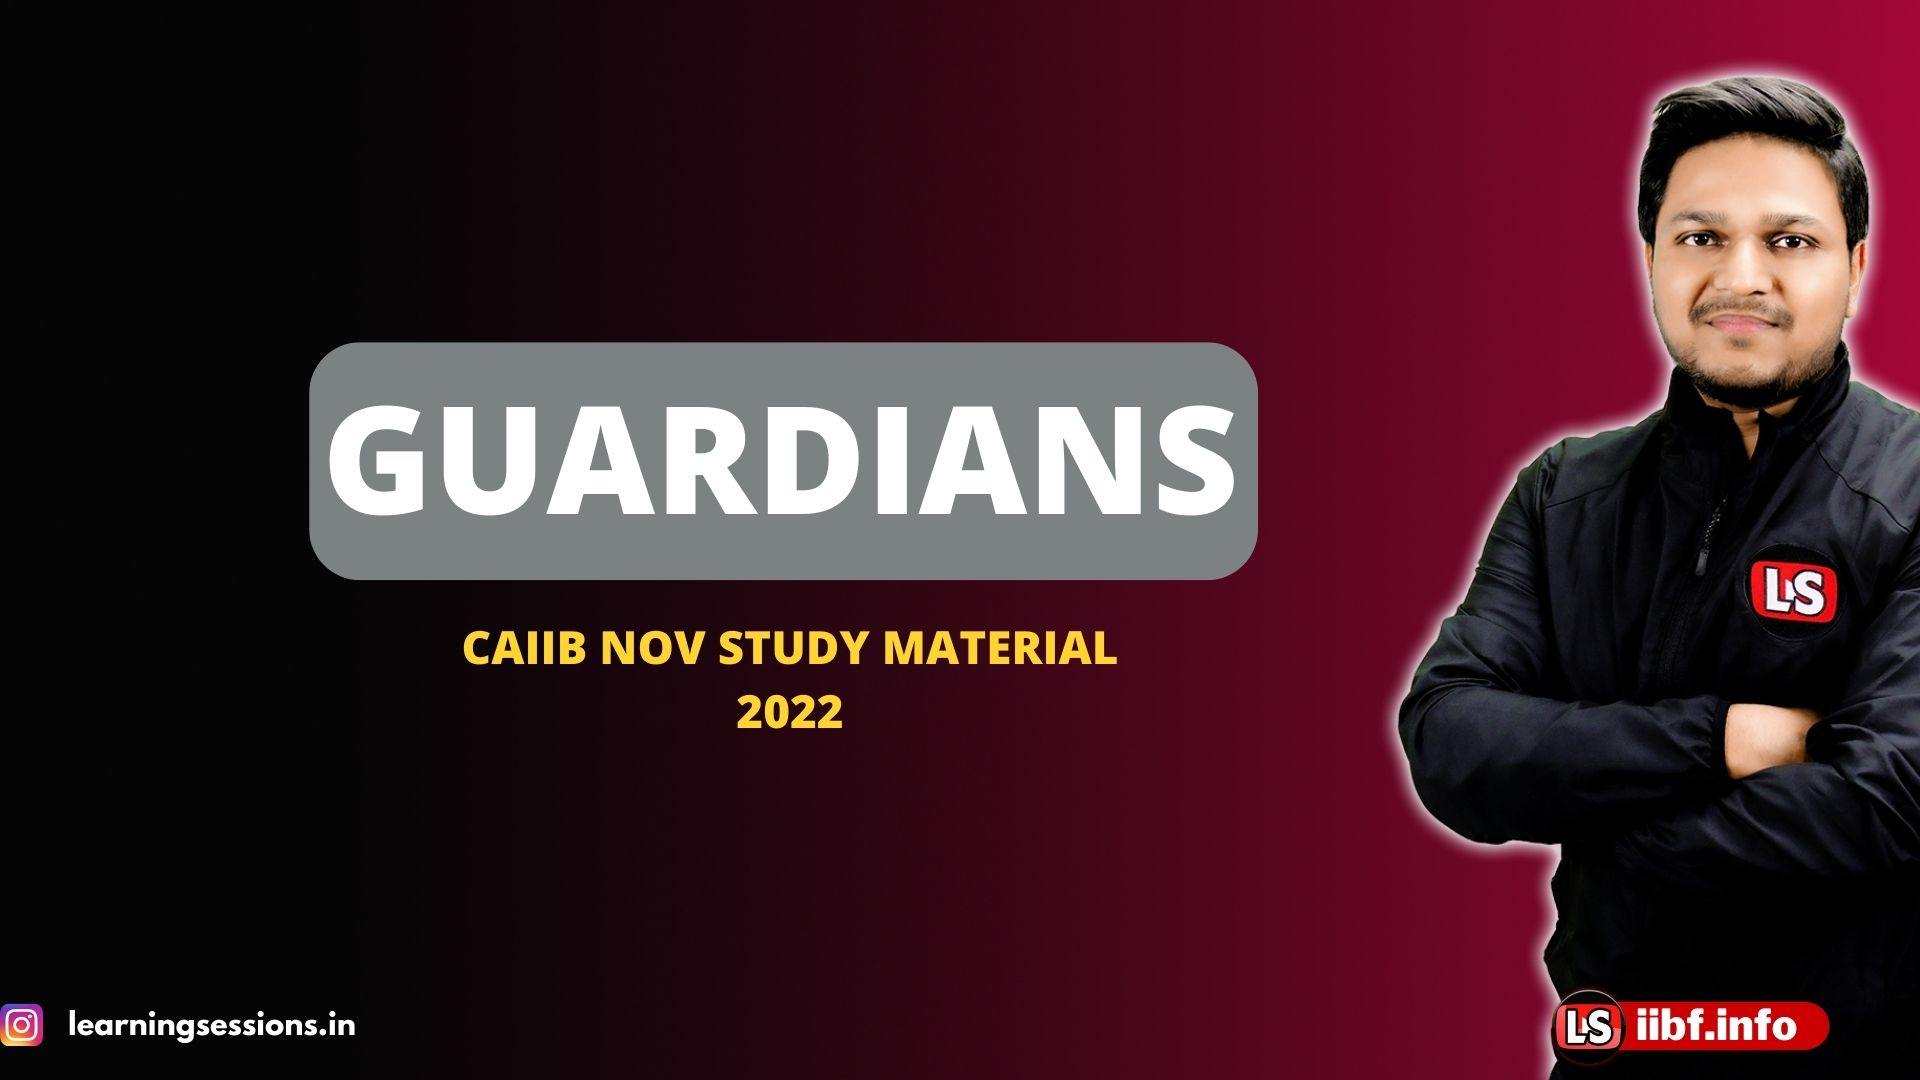 GUARDIANS | CAIIB NOV STUDY MATERIAL 2022